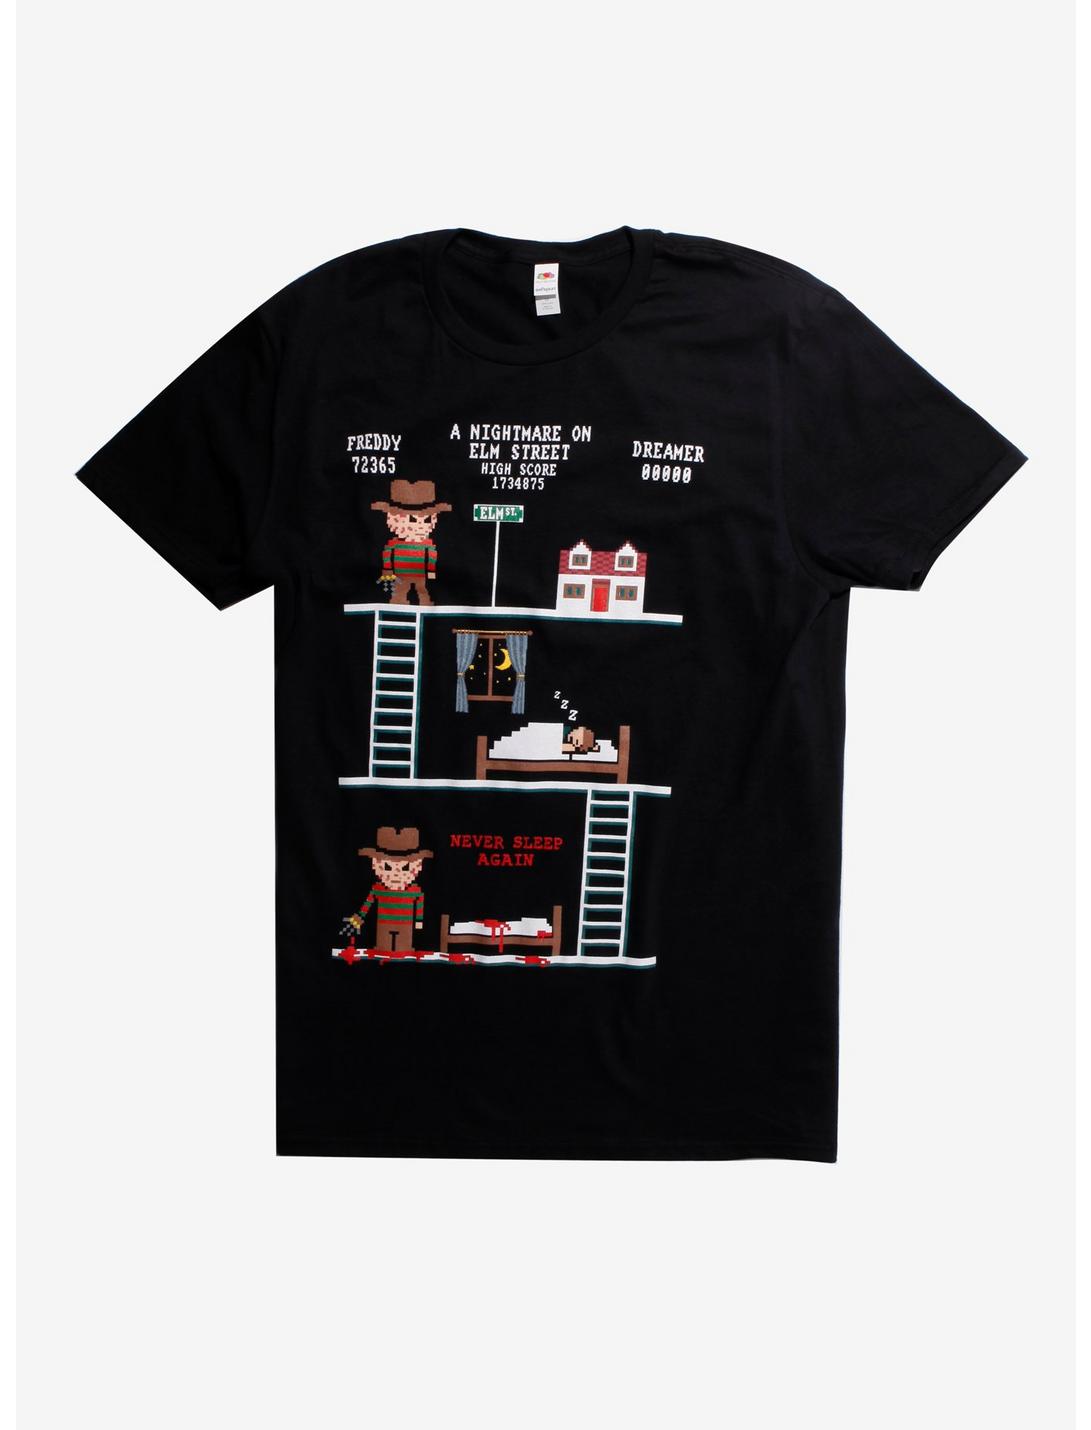 A Nightmare On Elm Street 8-Bit T-Shirt Hot Topic Exclusive, BLACK, hi-res